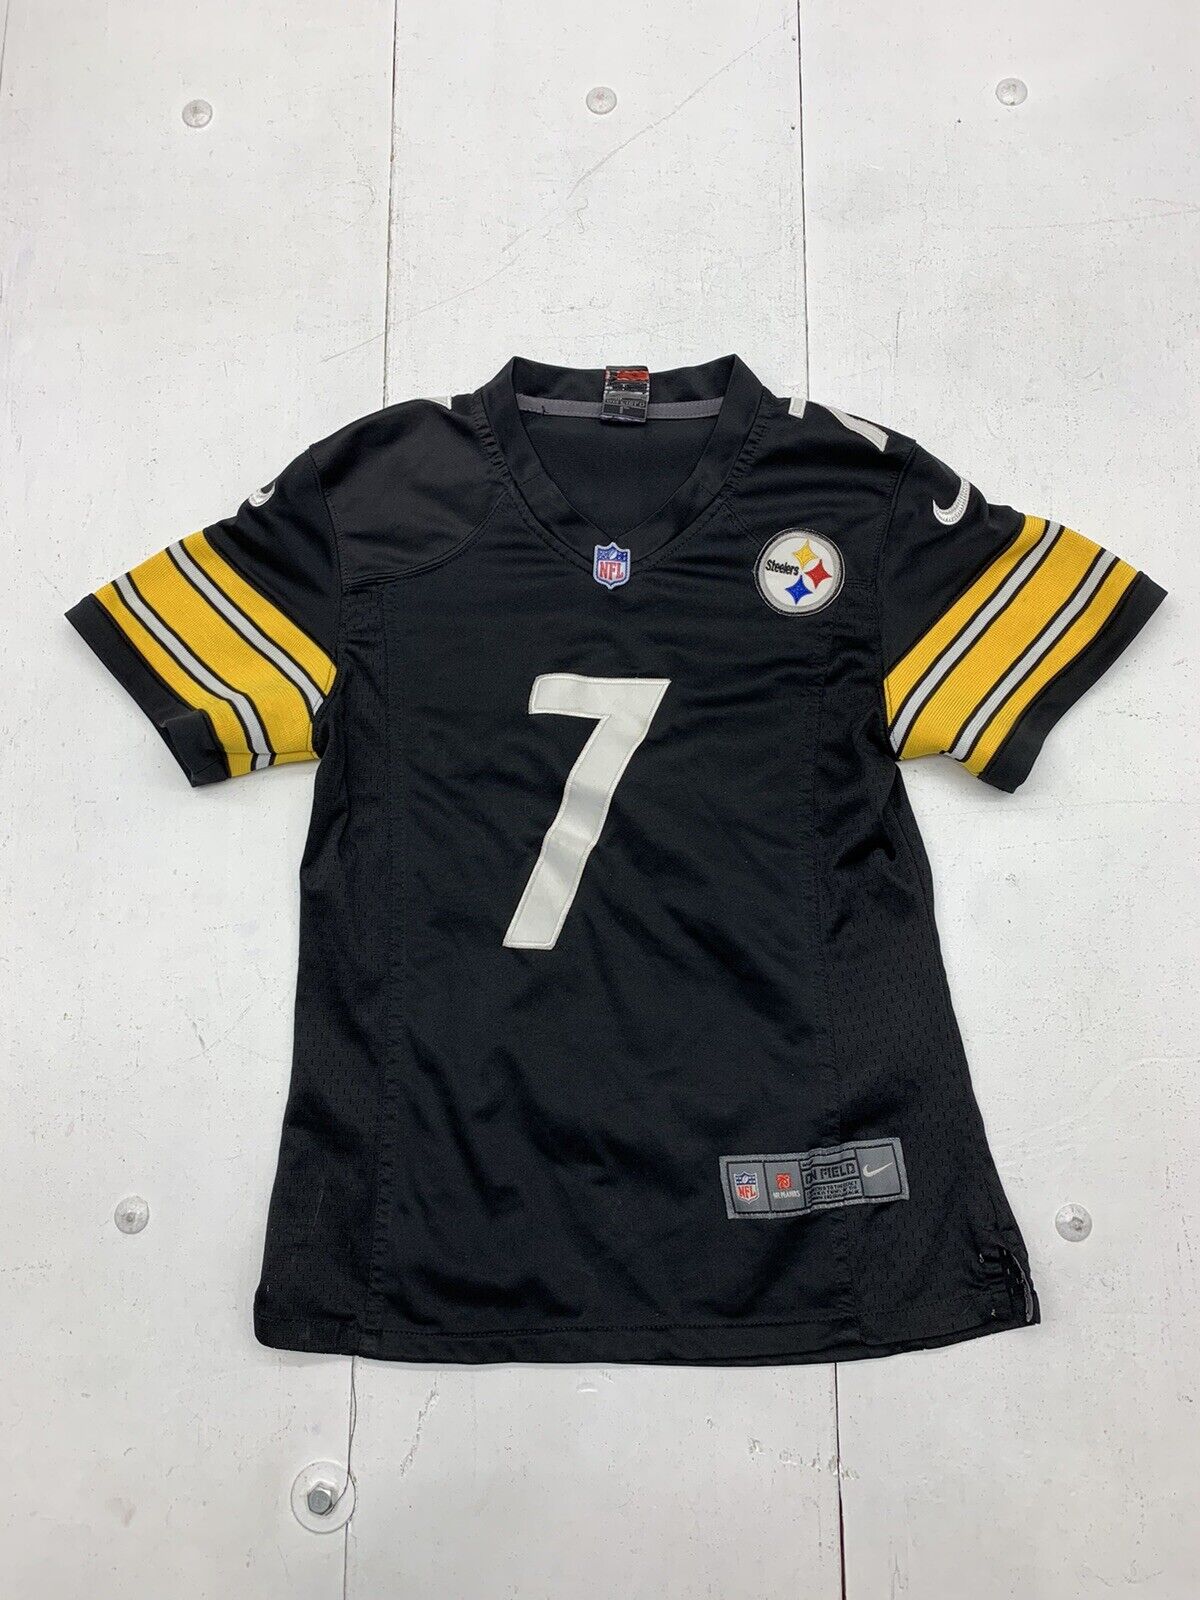 NFL Pittsburgh Steelers Kids Black Jersey Size Large - beyond exchange